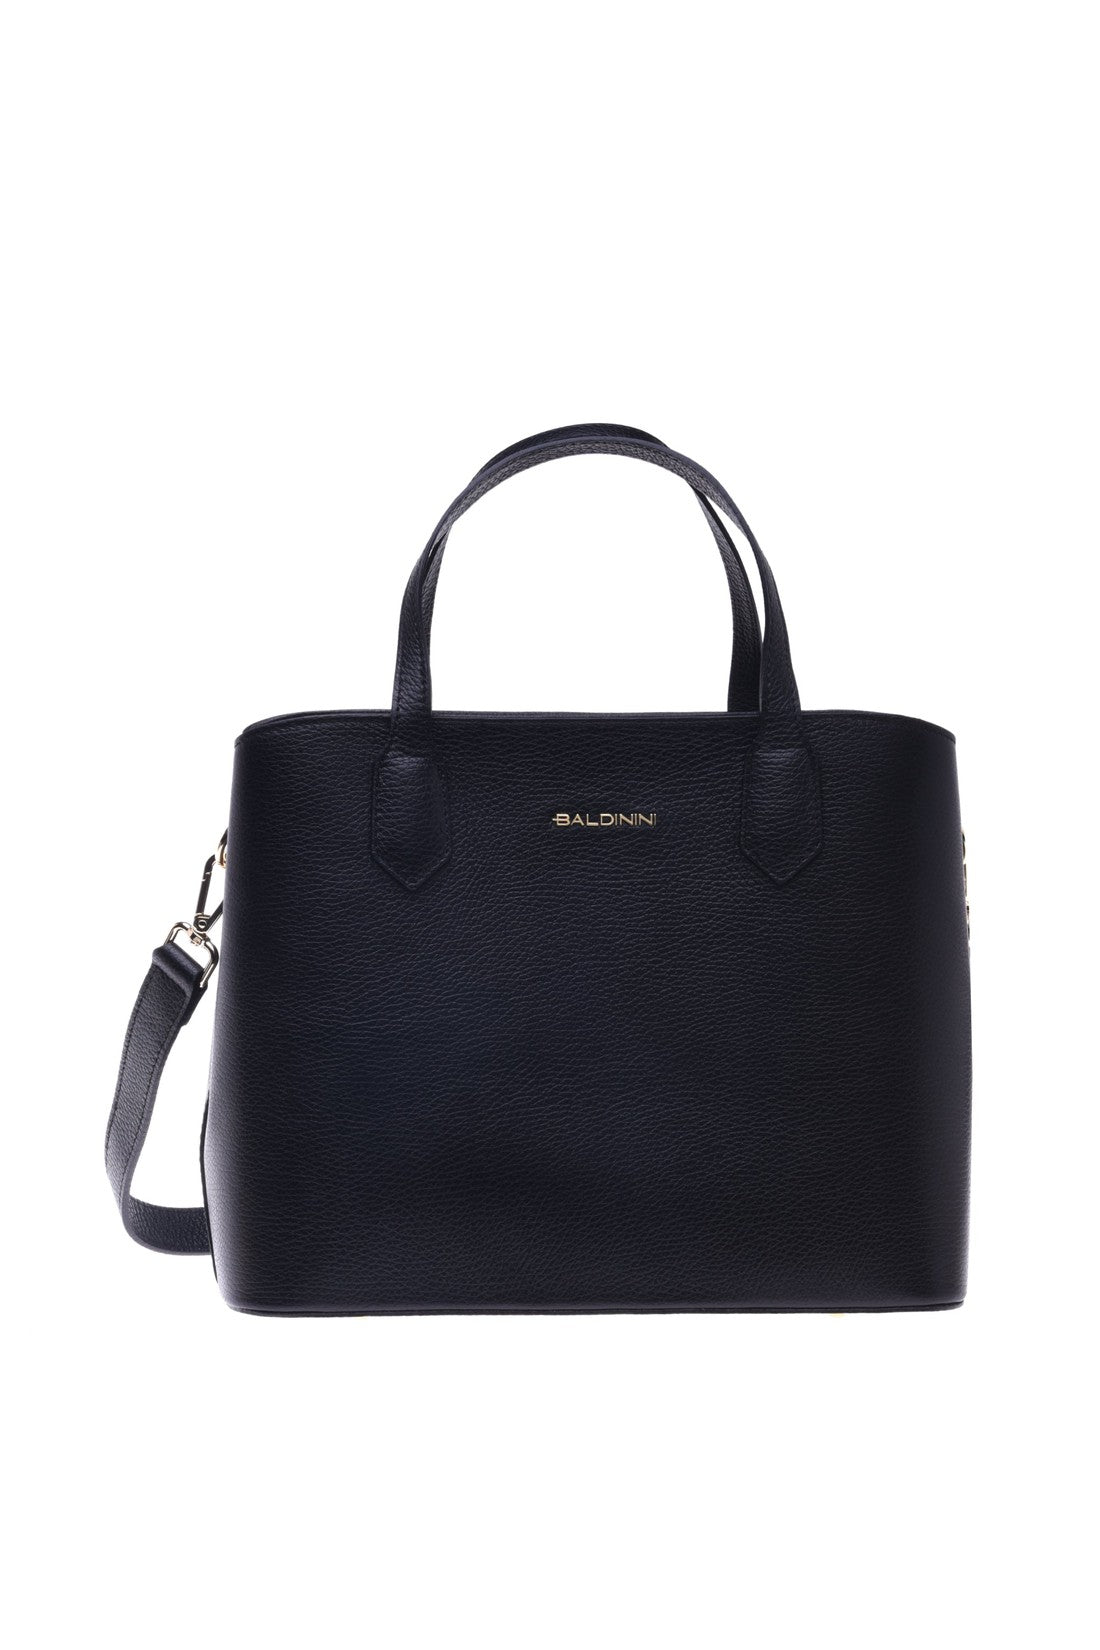 Handbag in black tumbled leather